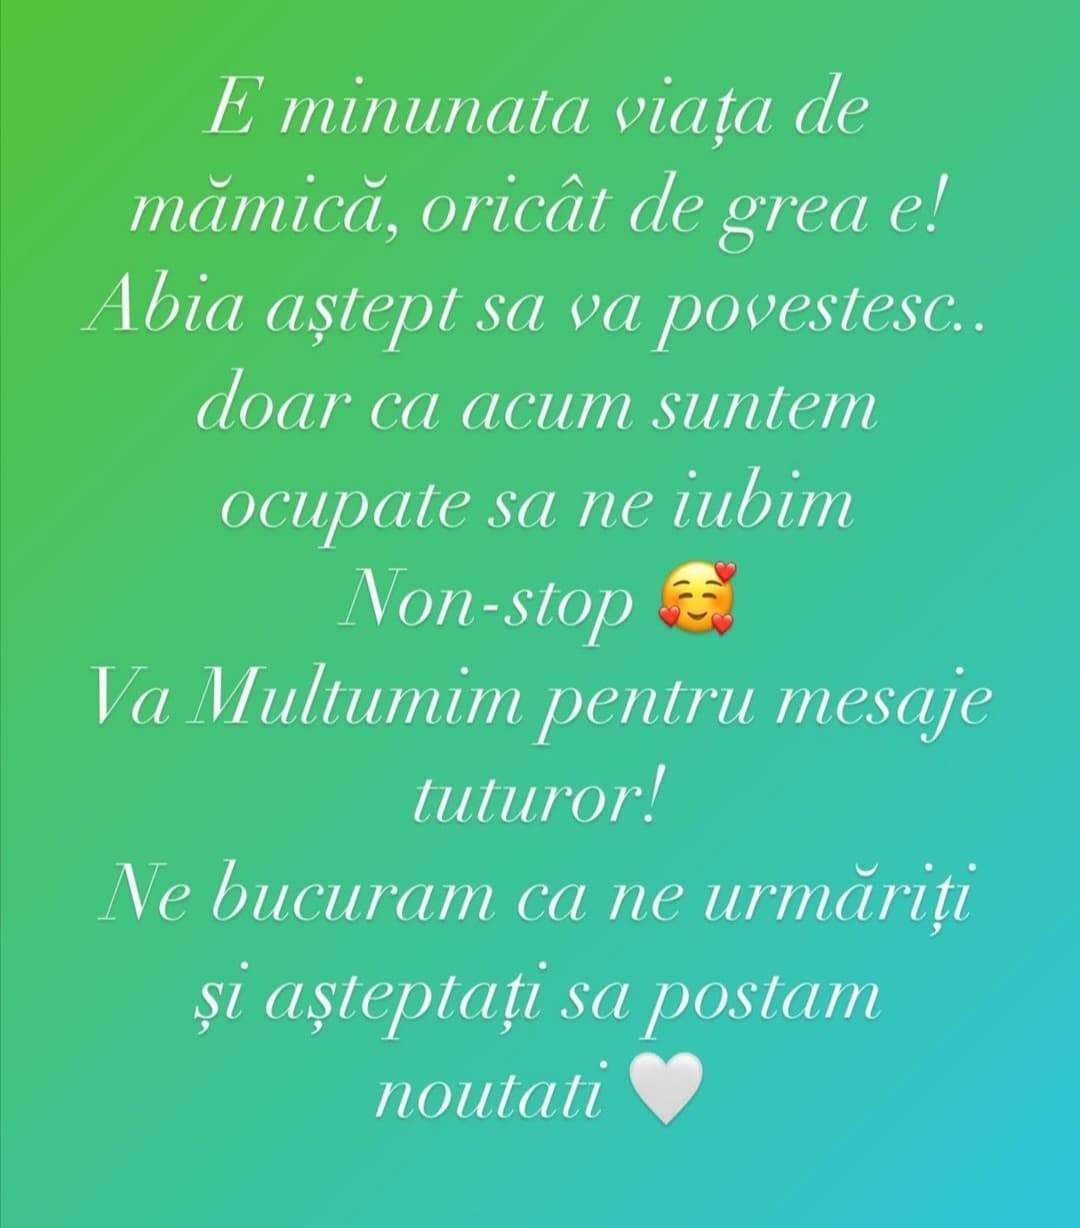 Mesajul publicat de Andrada Bărsăuan